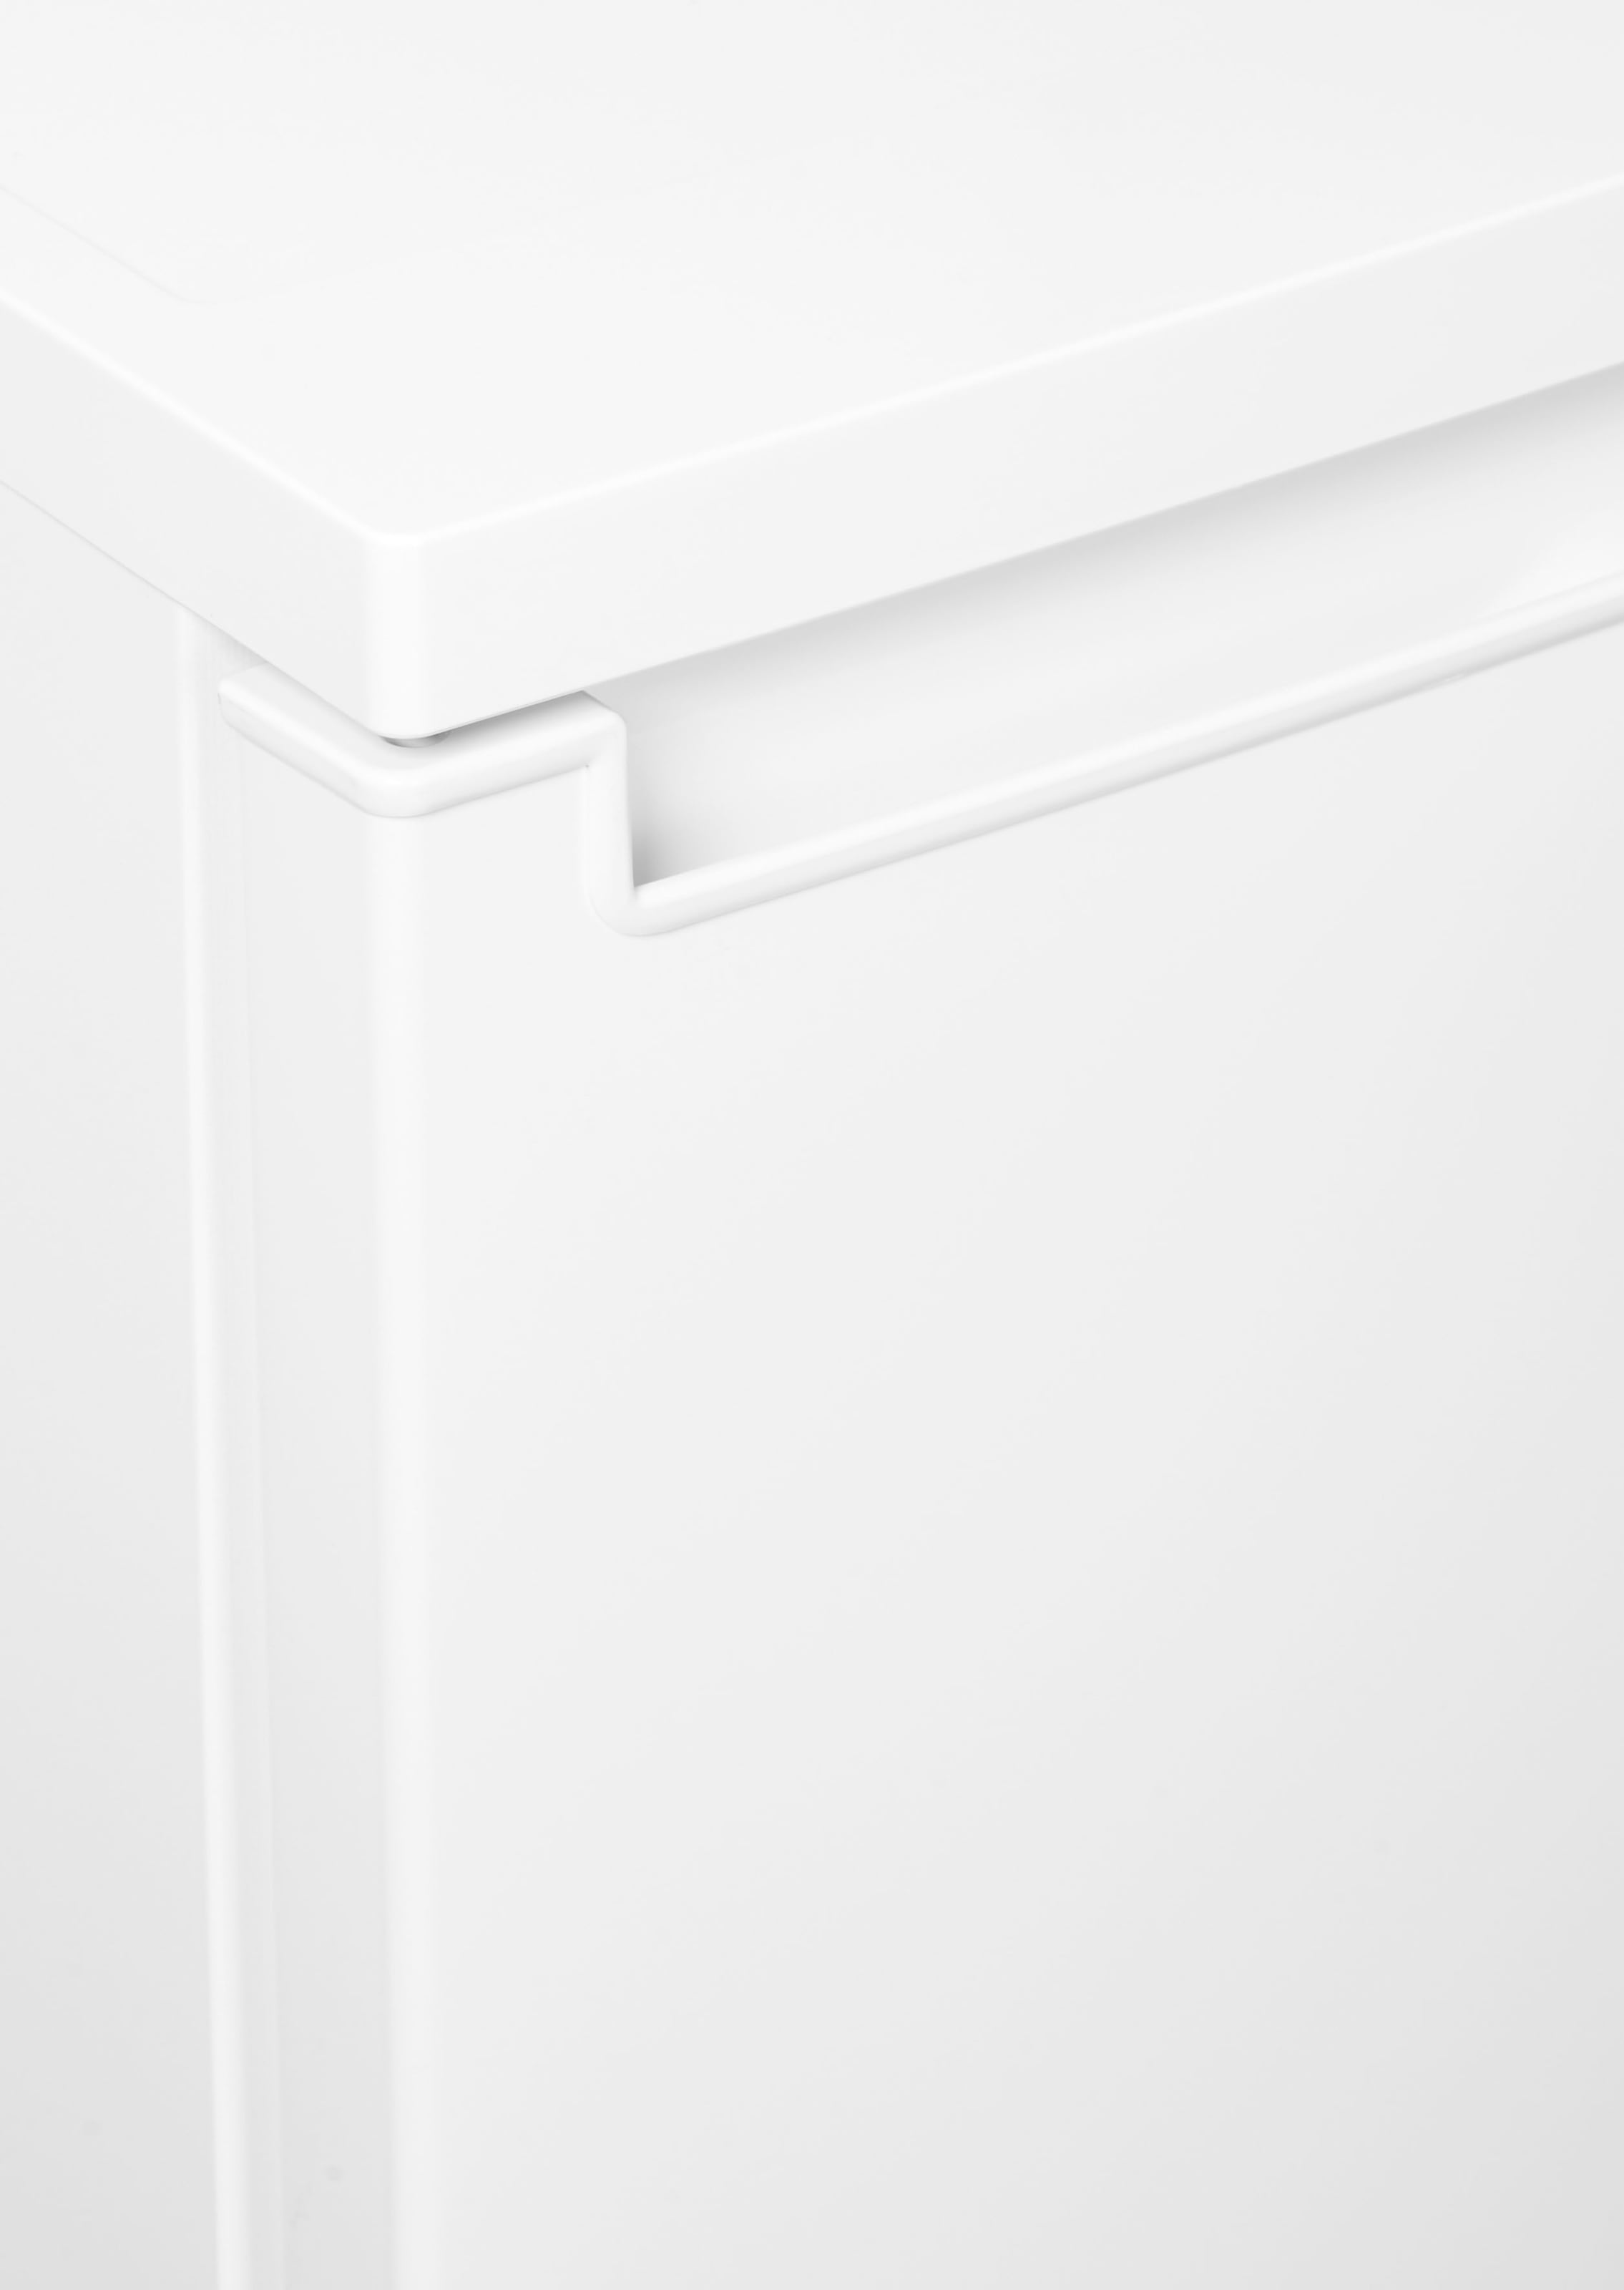 BOSCH Table Top Kühlschrank »KTR15NWEA«, KTR15NWEA, 85 cm hoch, 56 cm breit  online kaufen | BAUR